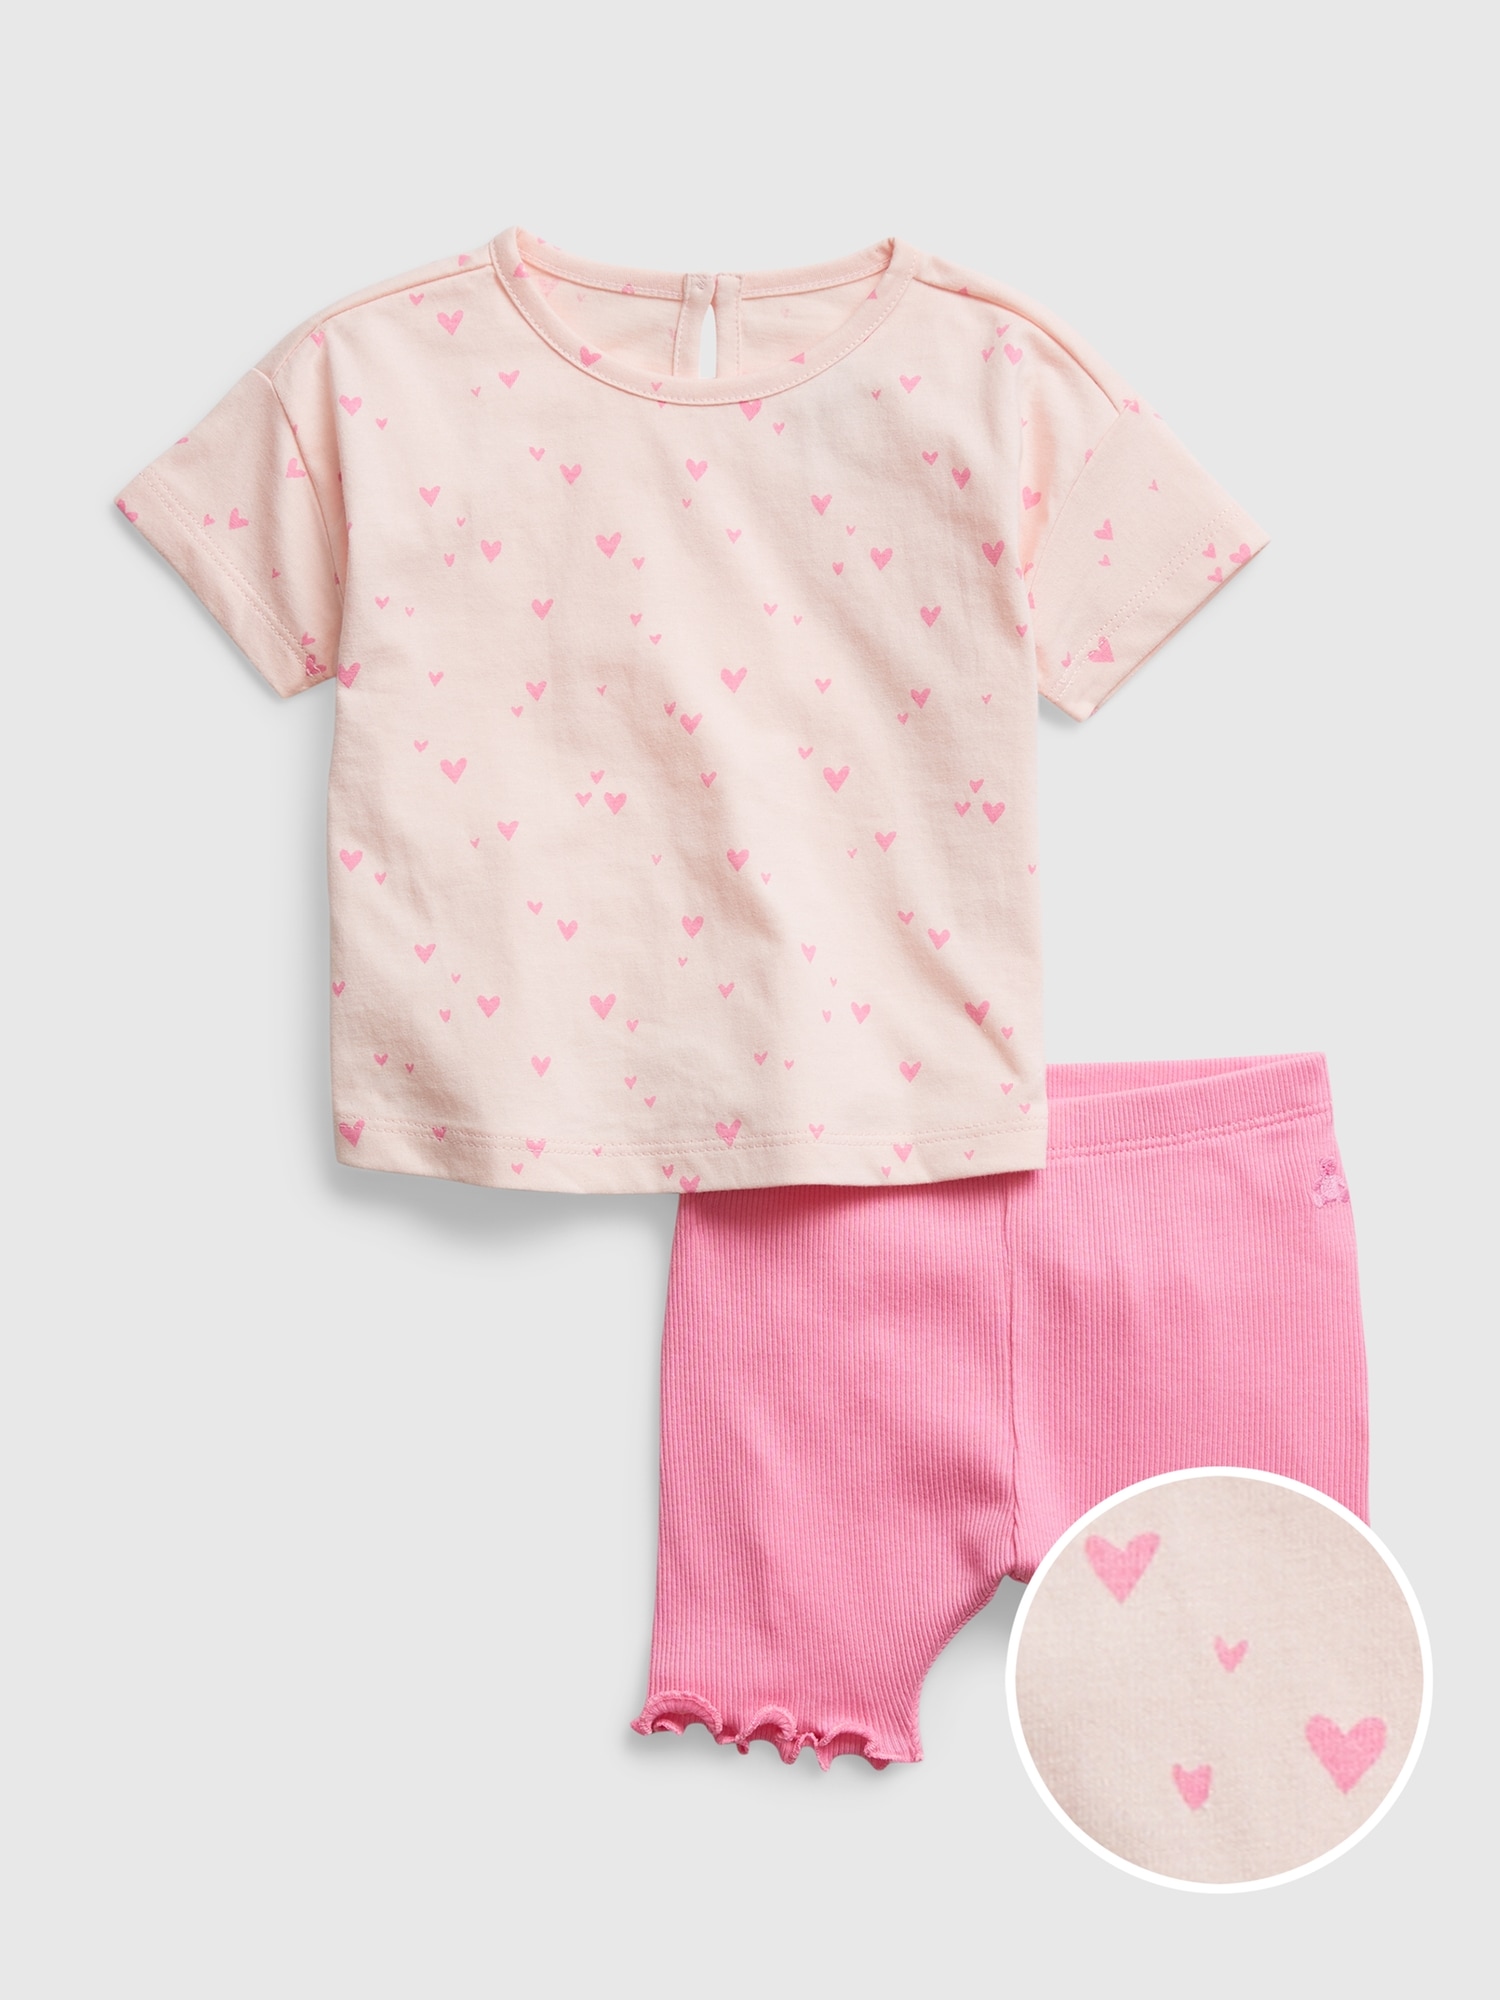 Baby 100% Organic Cotton Mix and Match 2-Piece Outfit Set | Gap